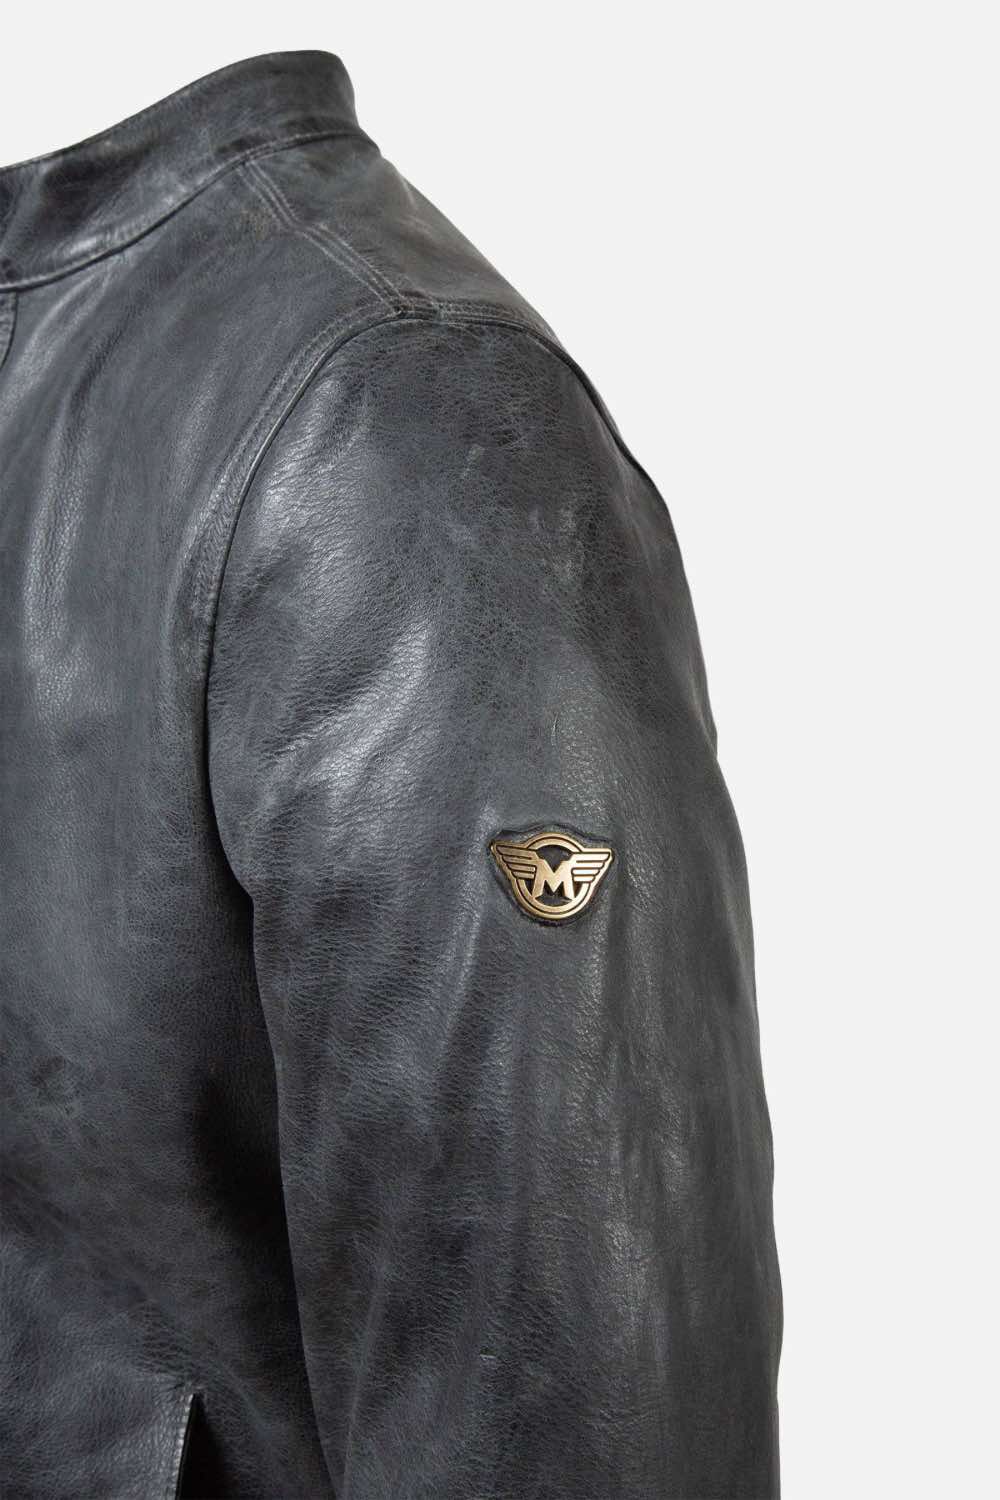 Matchless Shoreditch Shirt Men's Leather Jacket Antique Black - Close Up Logo